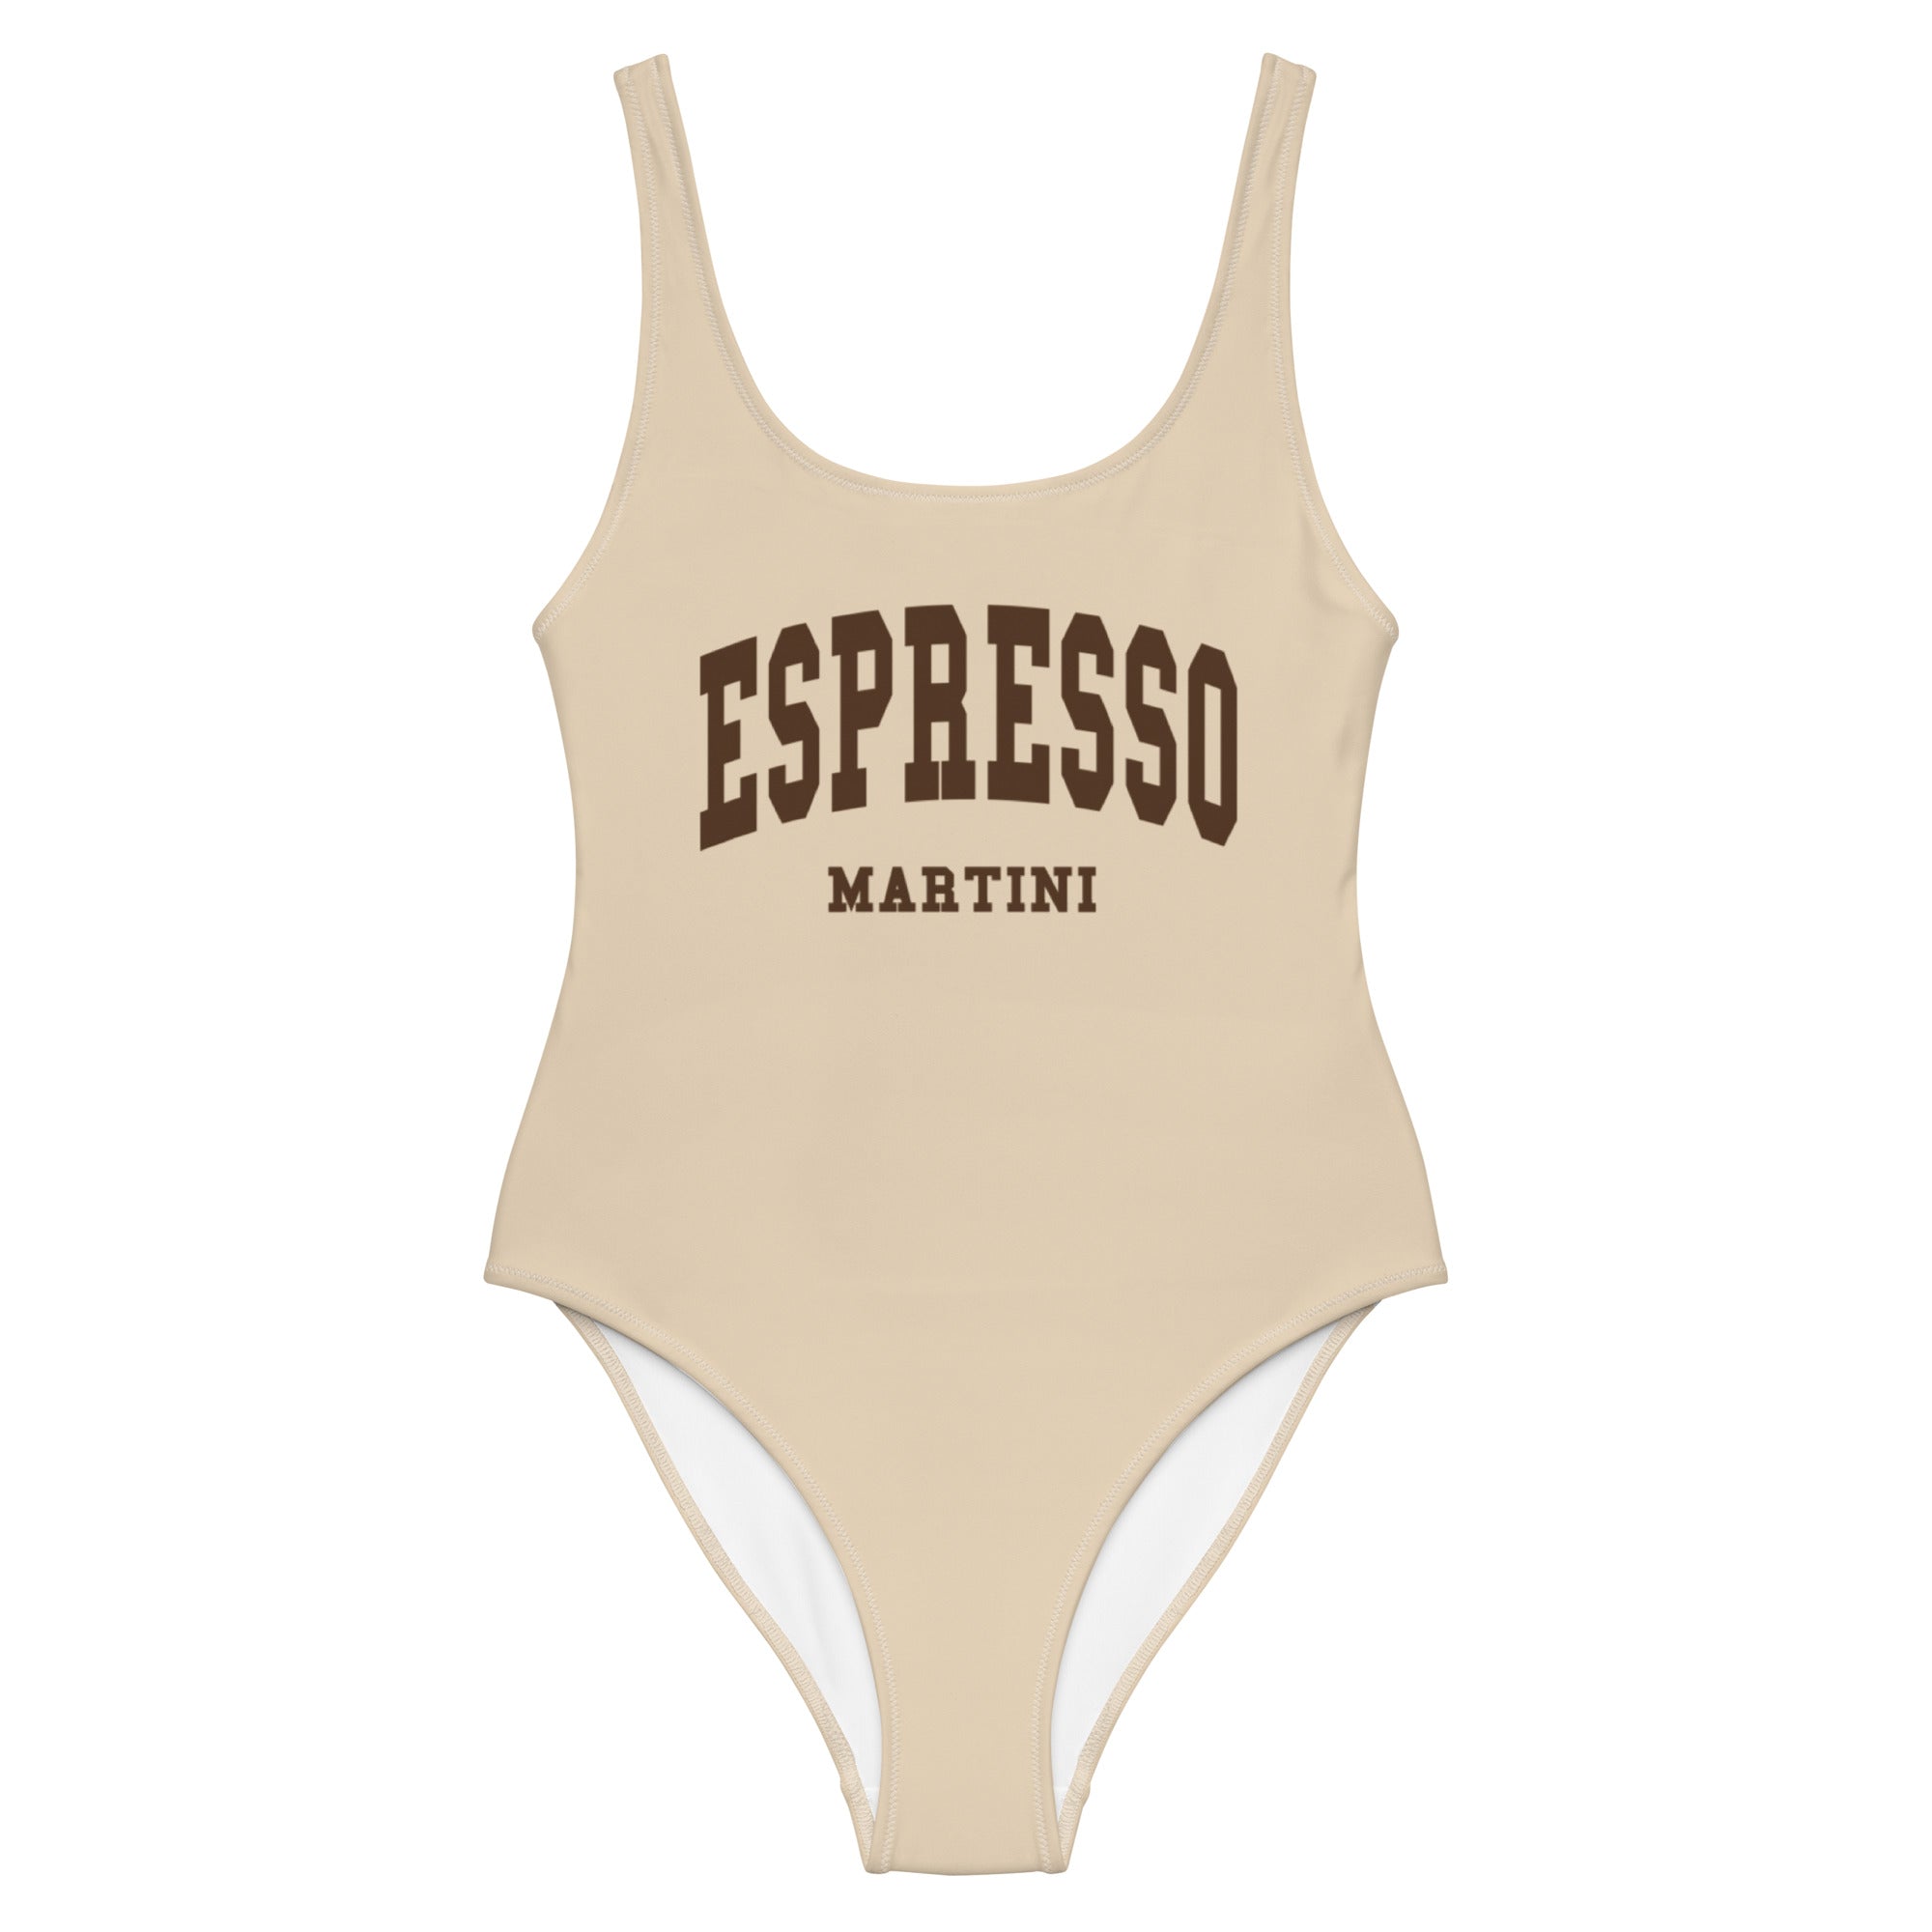 Espresso Martini - Swimsuit - The Refined Spirit